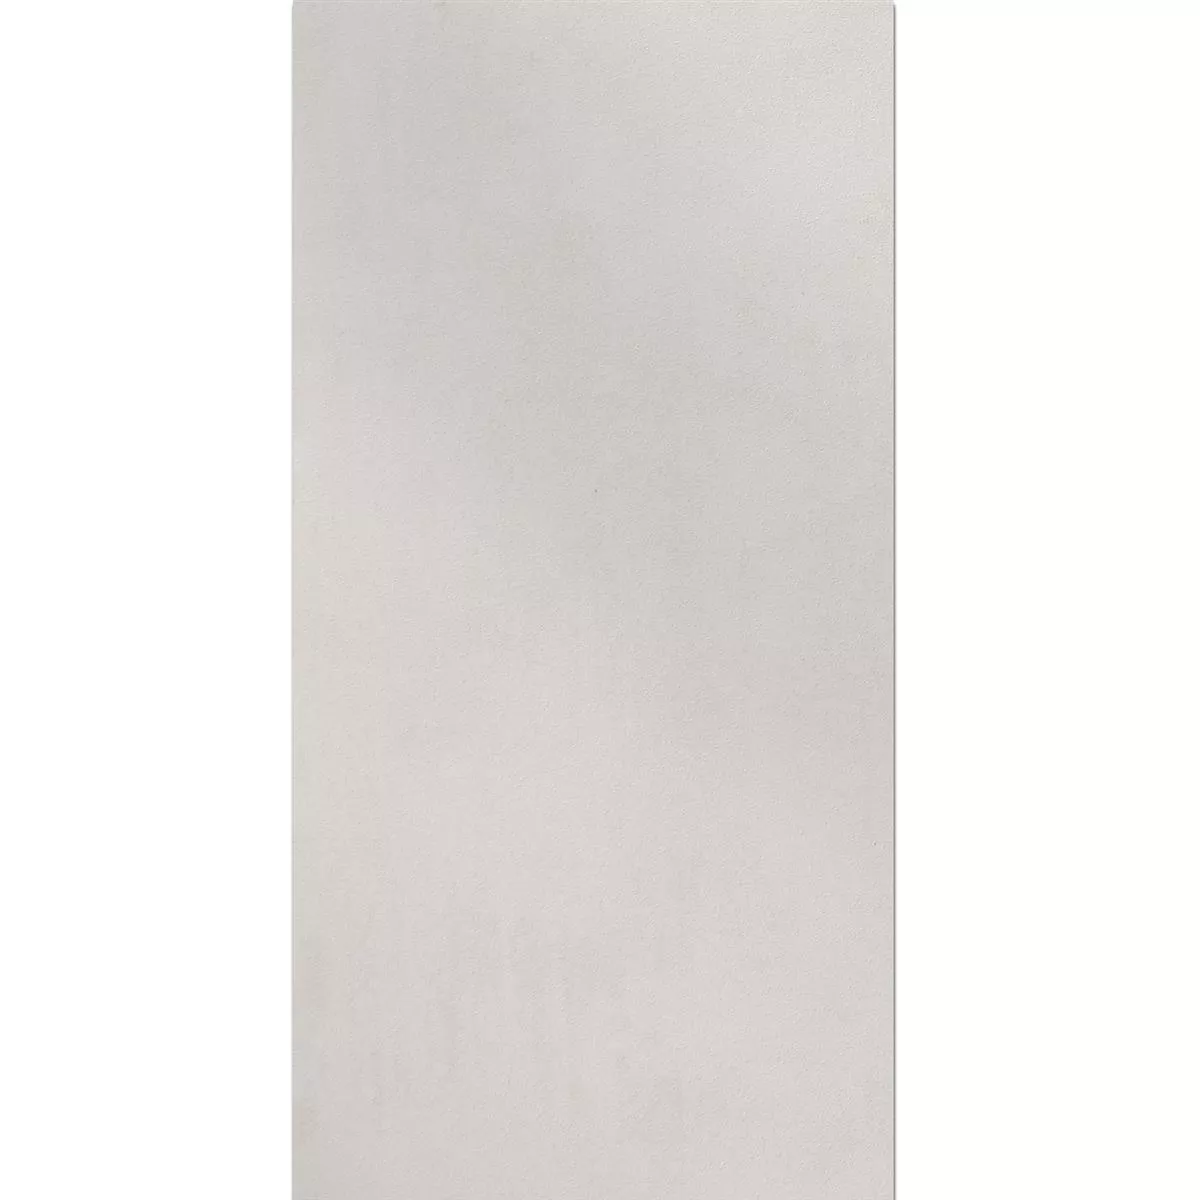 Terrastegels Zeus Beton Optic White 60x90cm